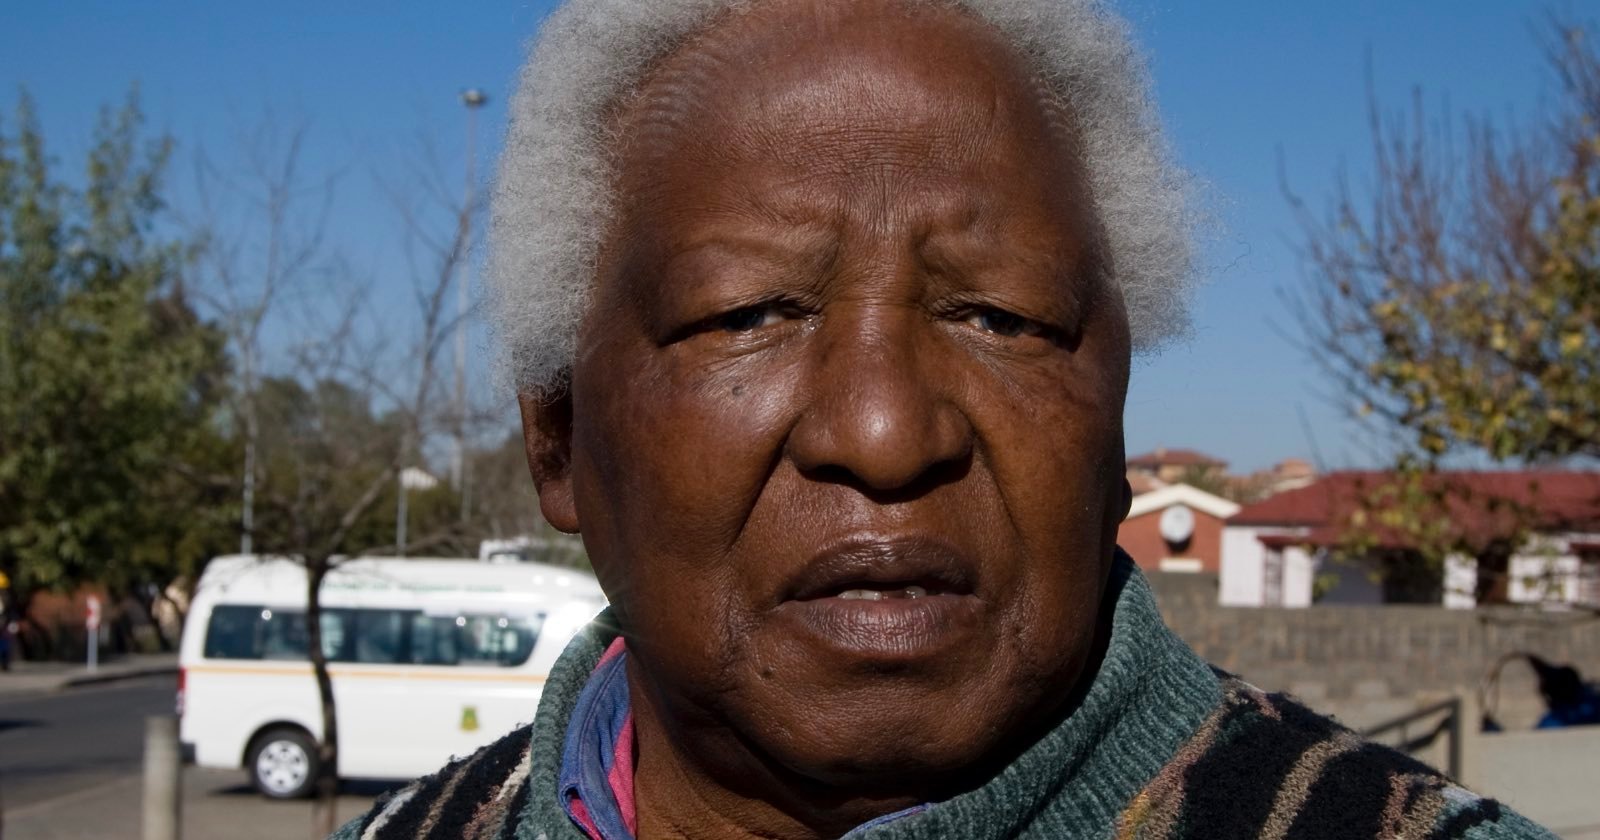  fearless apartheid photographer peter magubane dies aged 